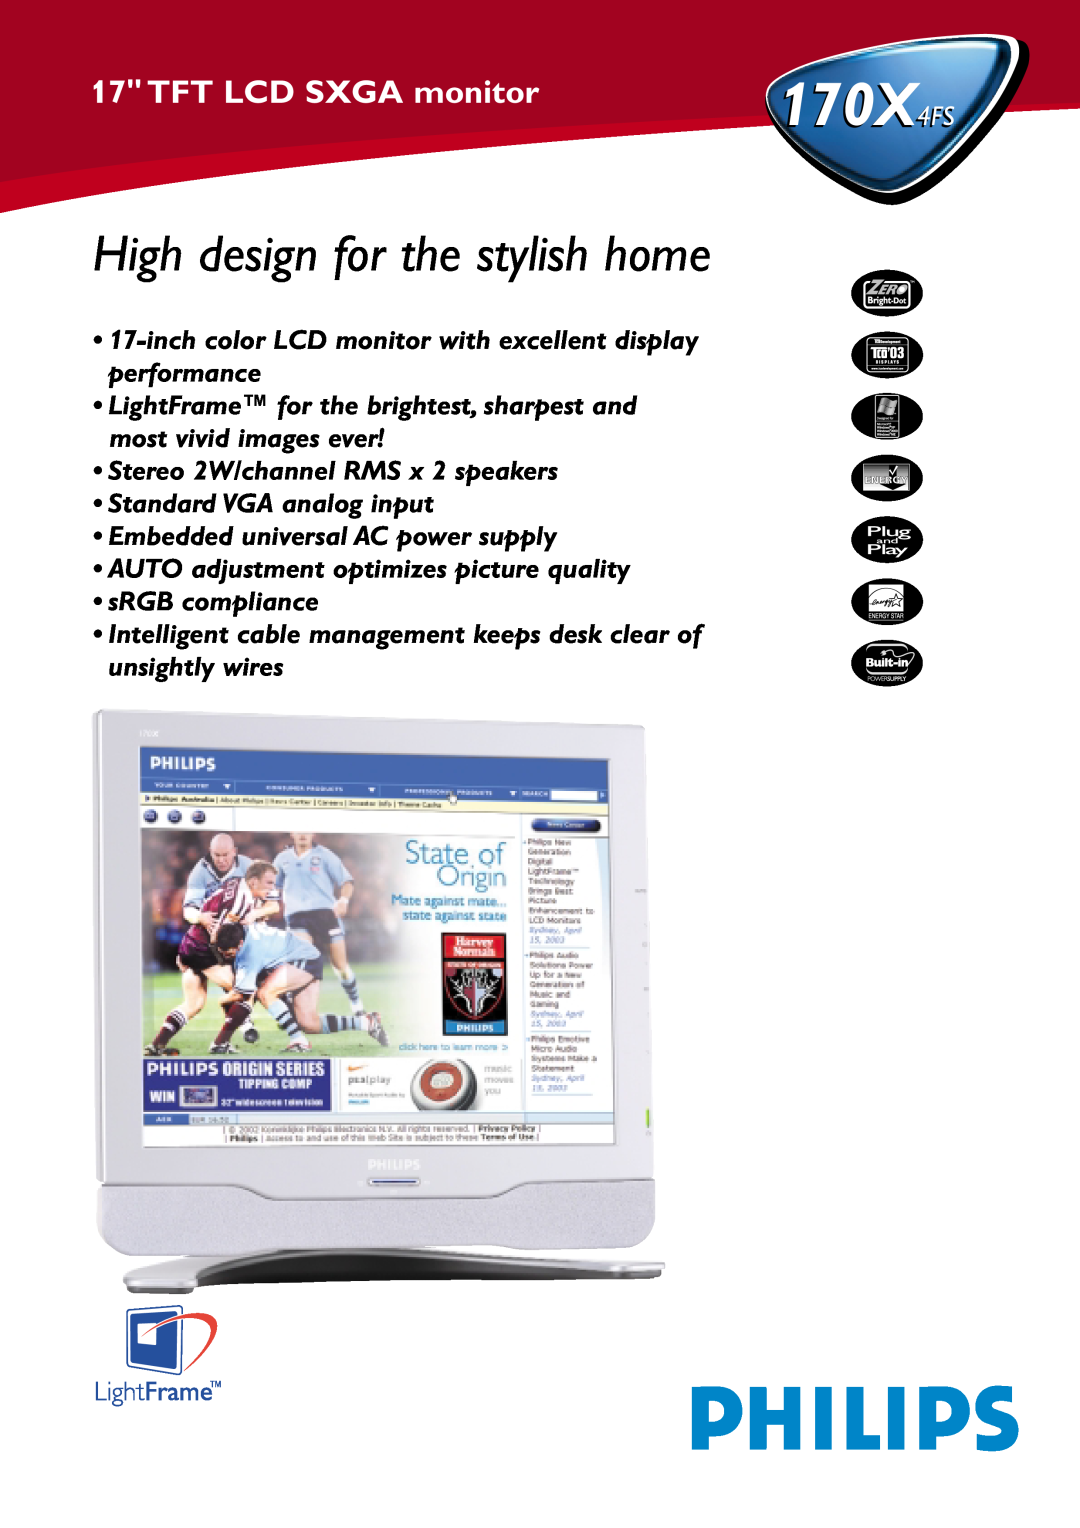 Philips 170X4FS manual High design for the stylish home, TFT LCD SXGA monitor 